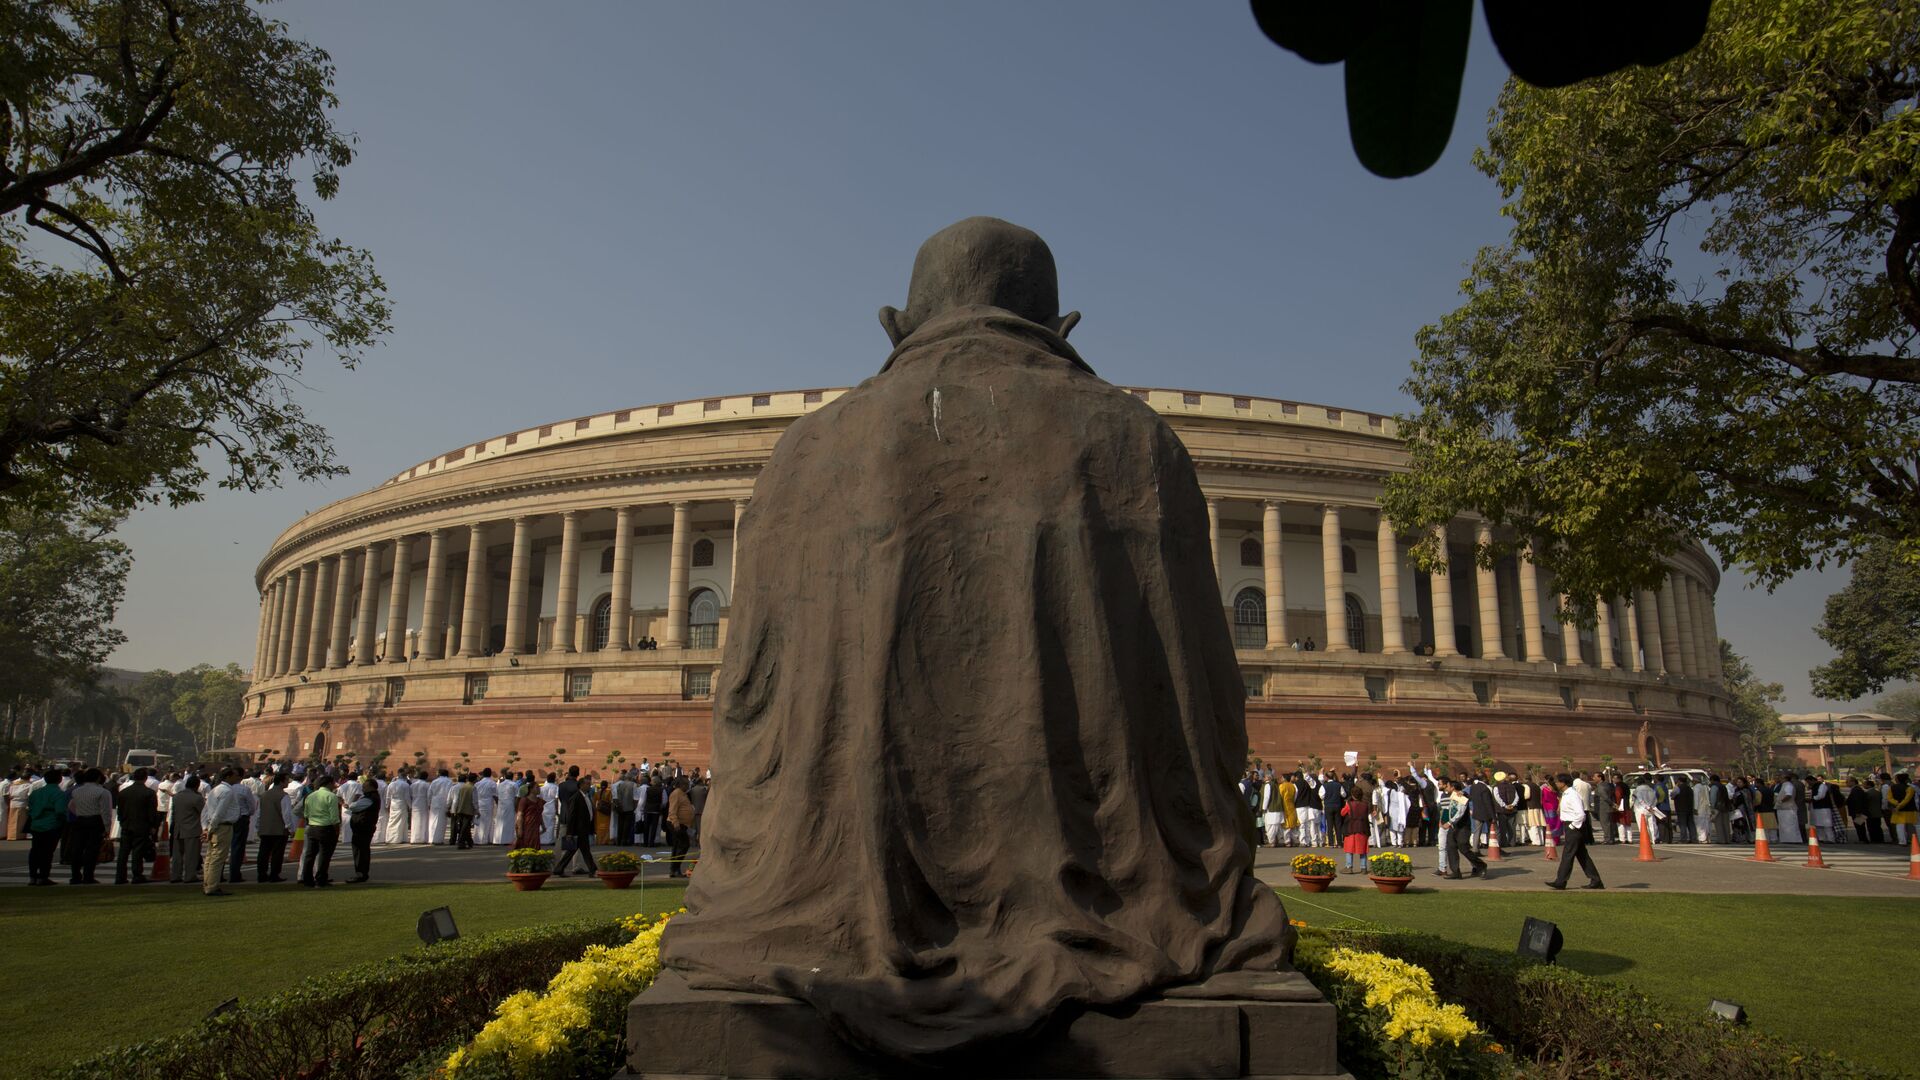 A statue of Mahatma Gandhi overlooks the Indian parliament building (File) - Sputnik International, 1920, 02.08.2021